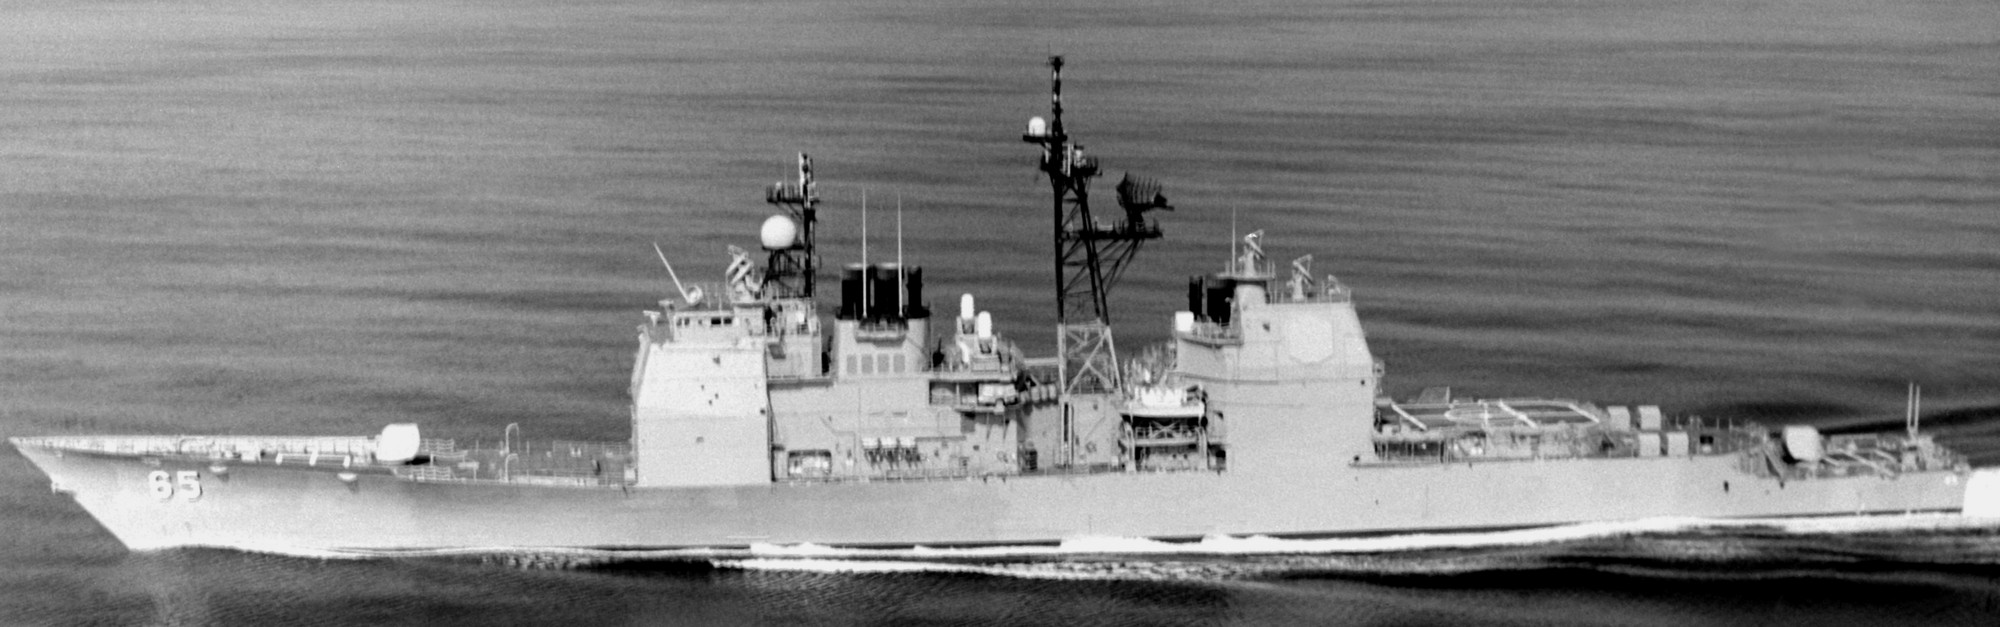 cg-65 uss chosin ticonderoga class guided missile cruiser aegis us navy sea trials 83